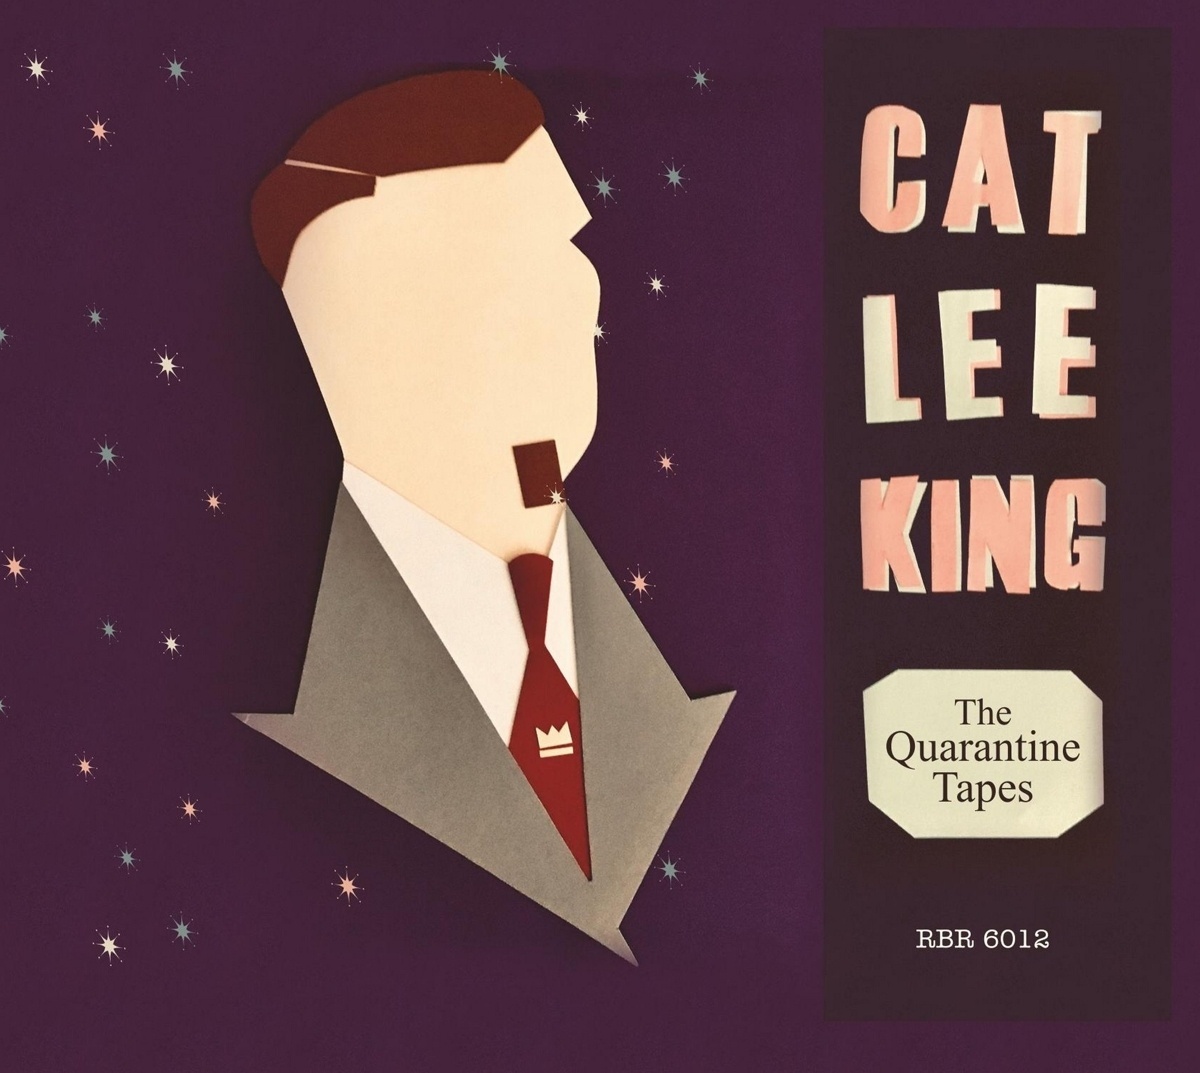 The Quarantine Tapes - Cat Lee King. (CD)